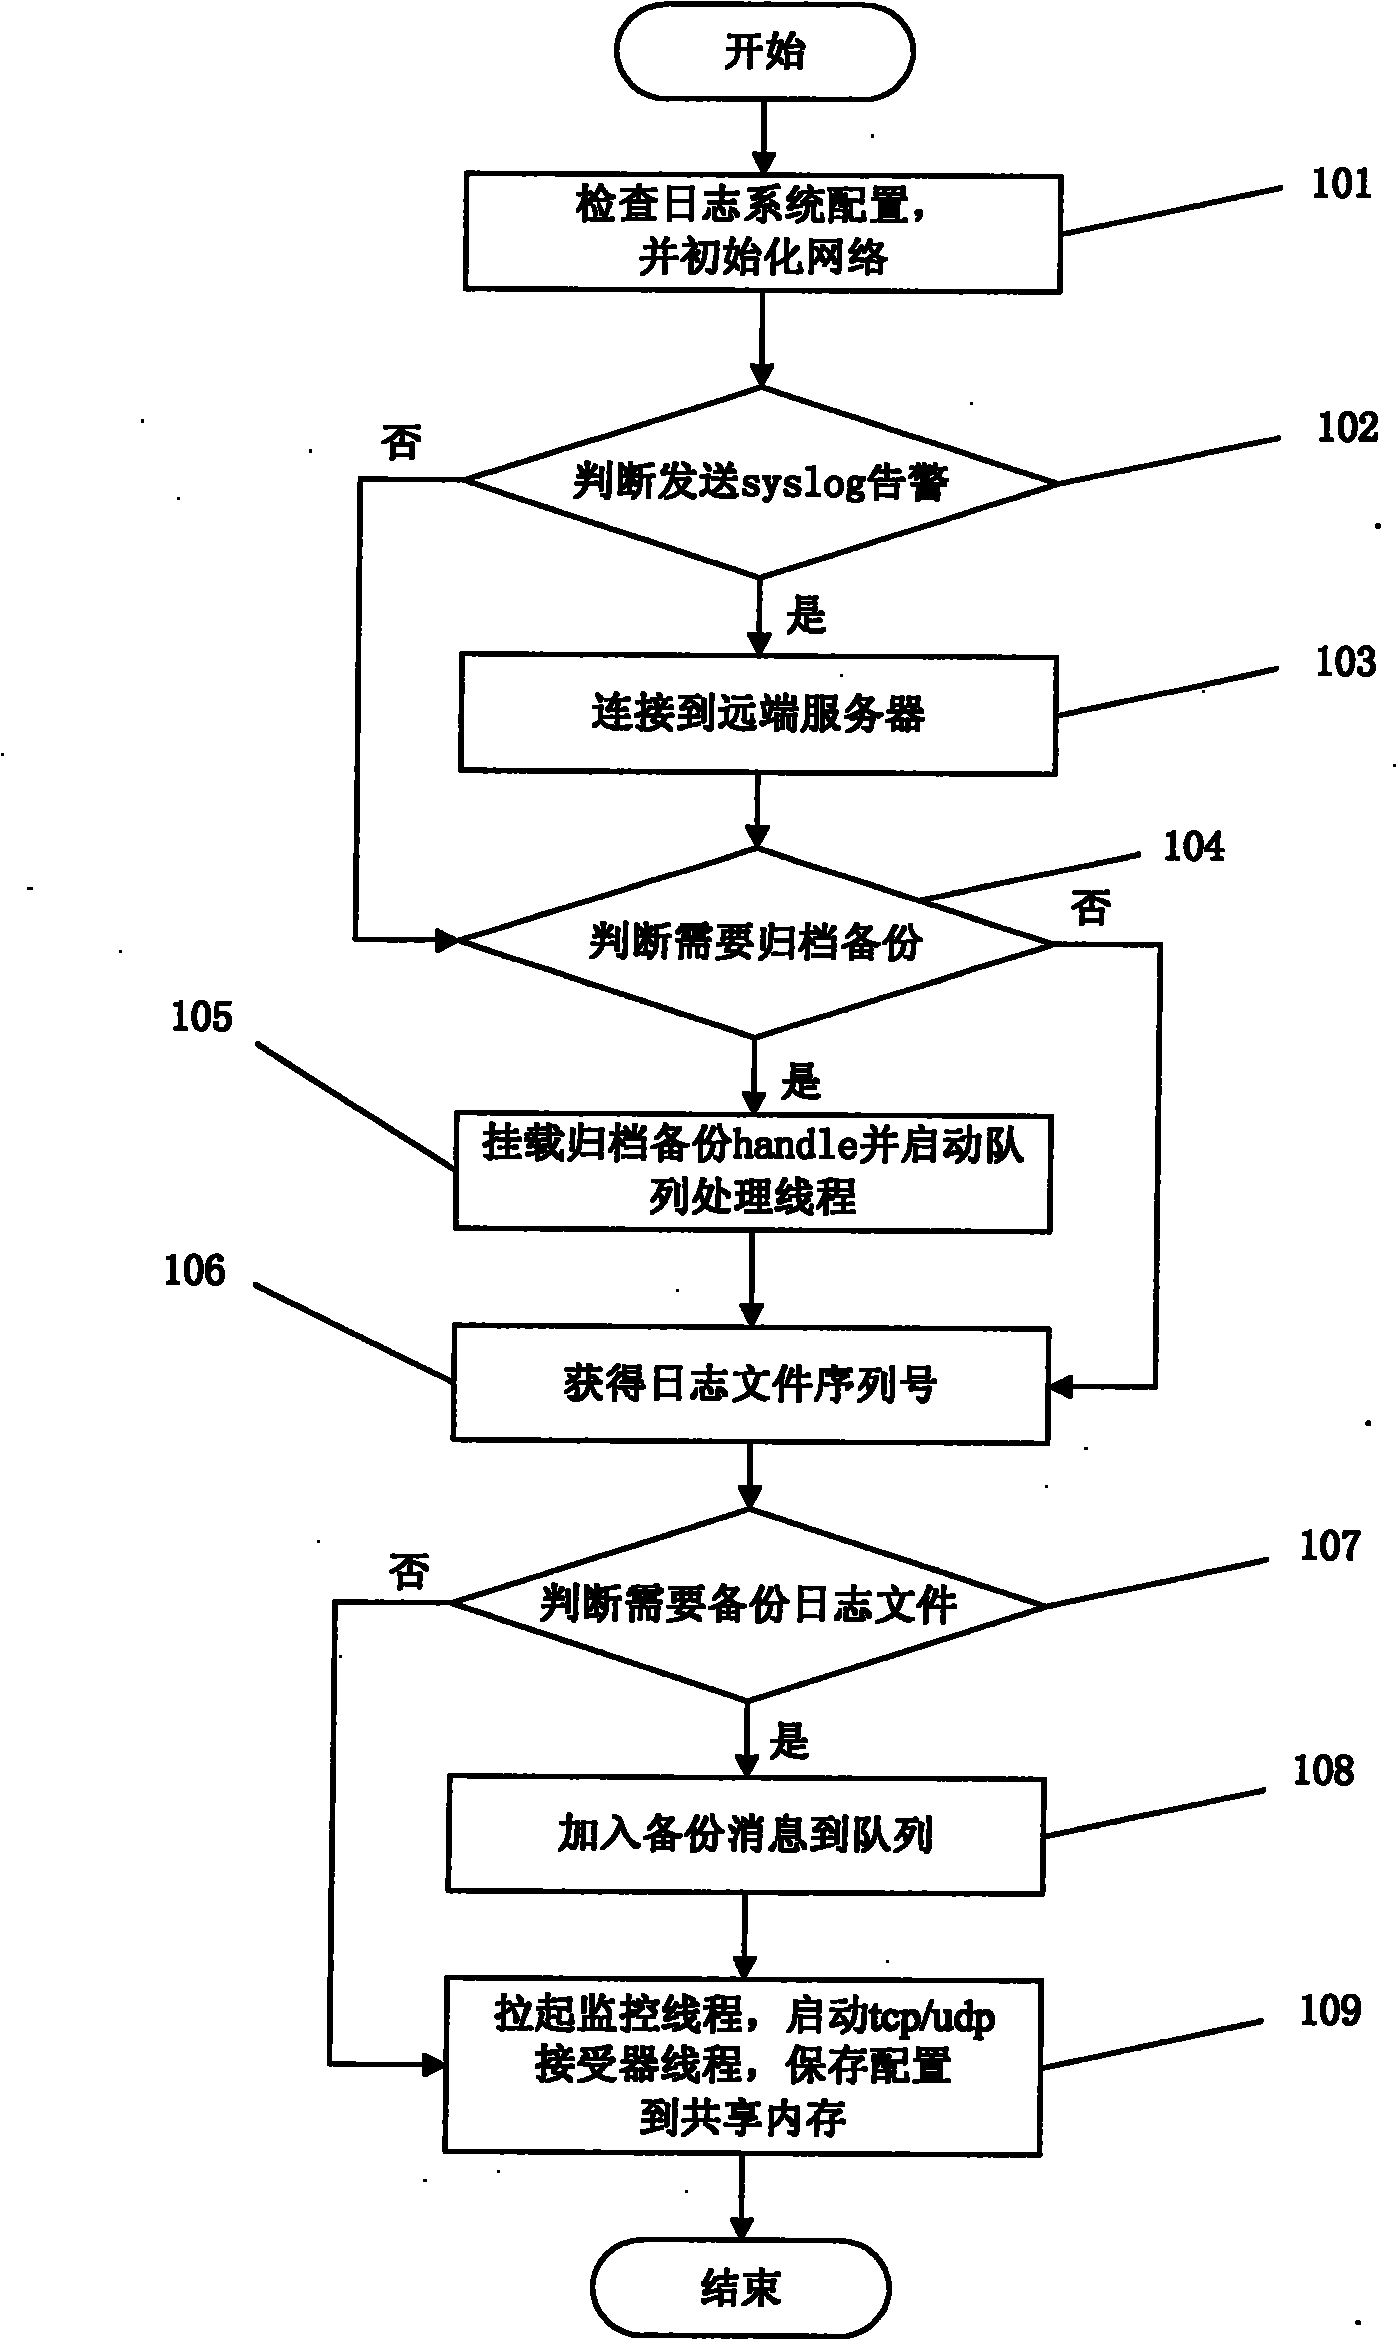 Operating method of log system